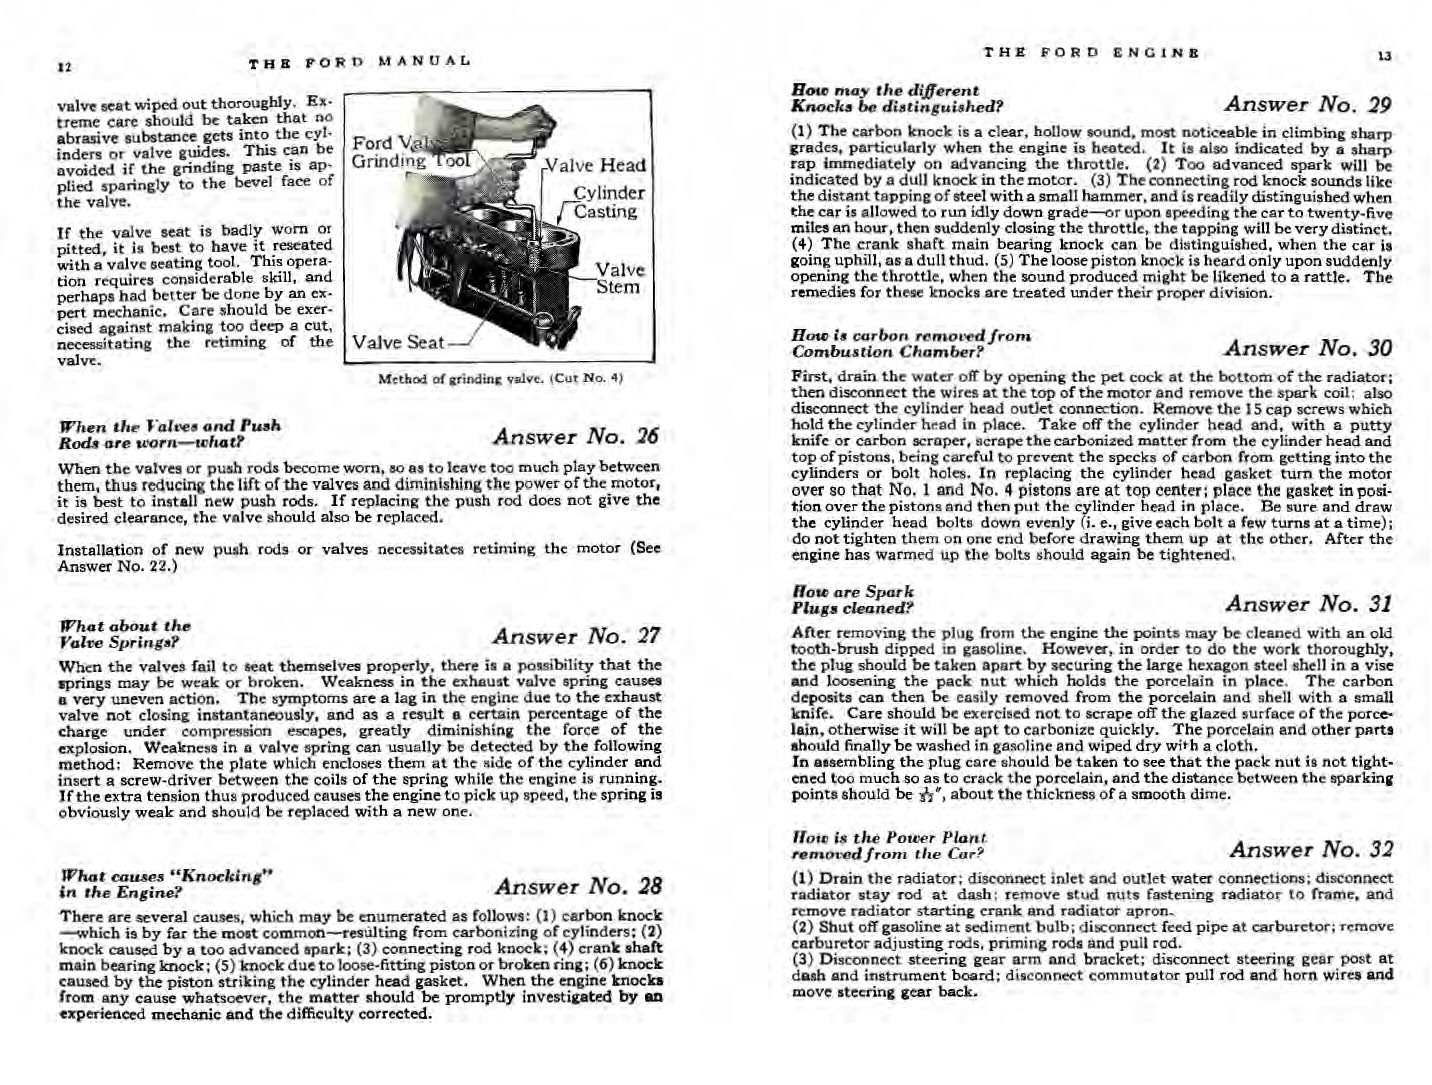 n_1926 Ford Owners Manual-12-13.jpg